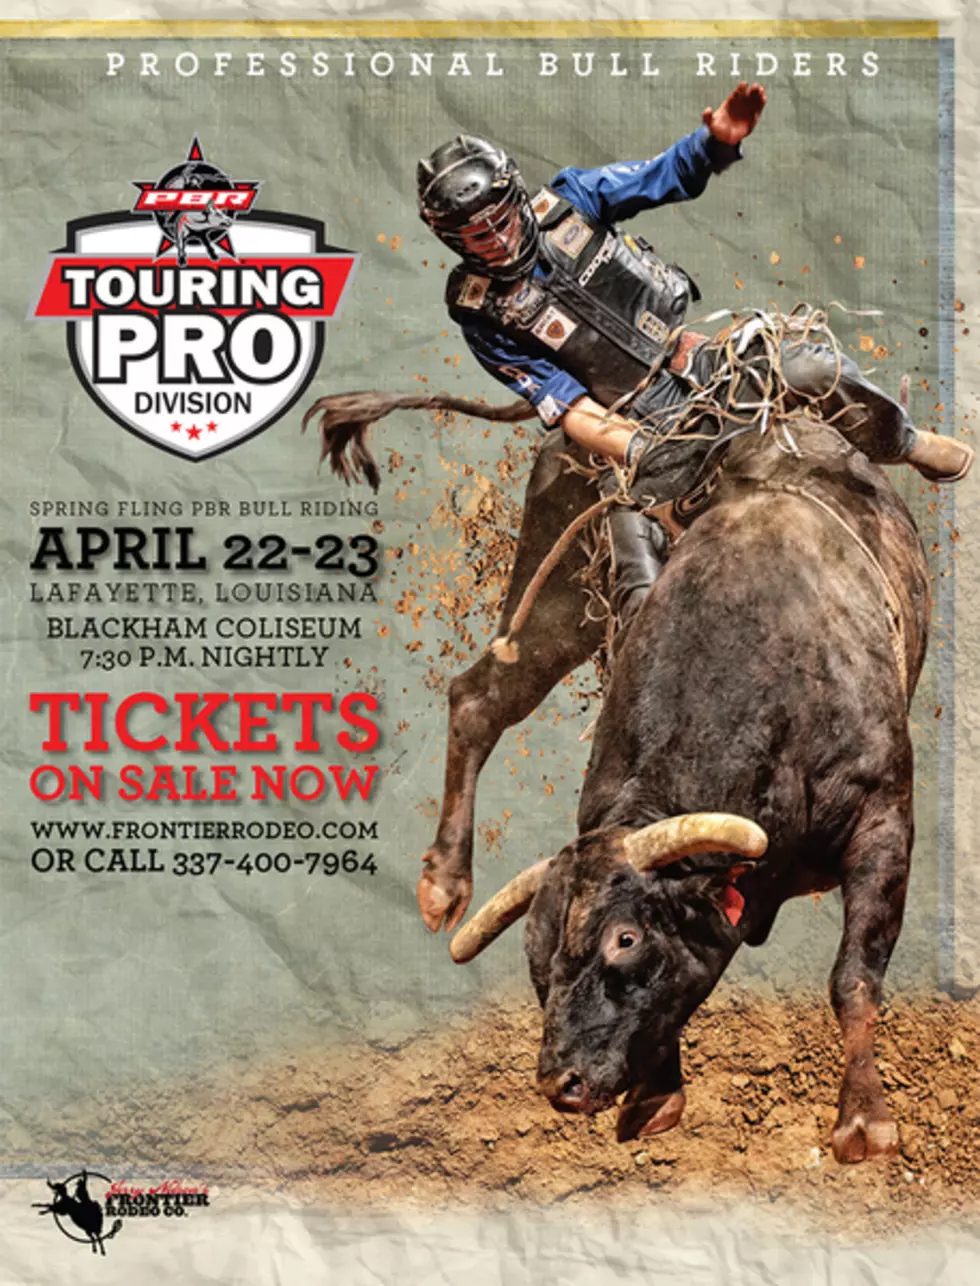 Spring Fling PBR Bull Riding Coming To Blackham Coliseum April 22-23